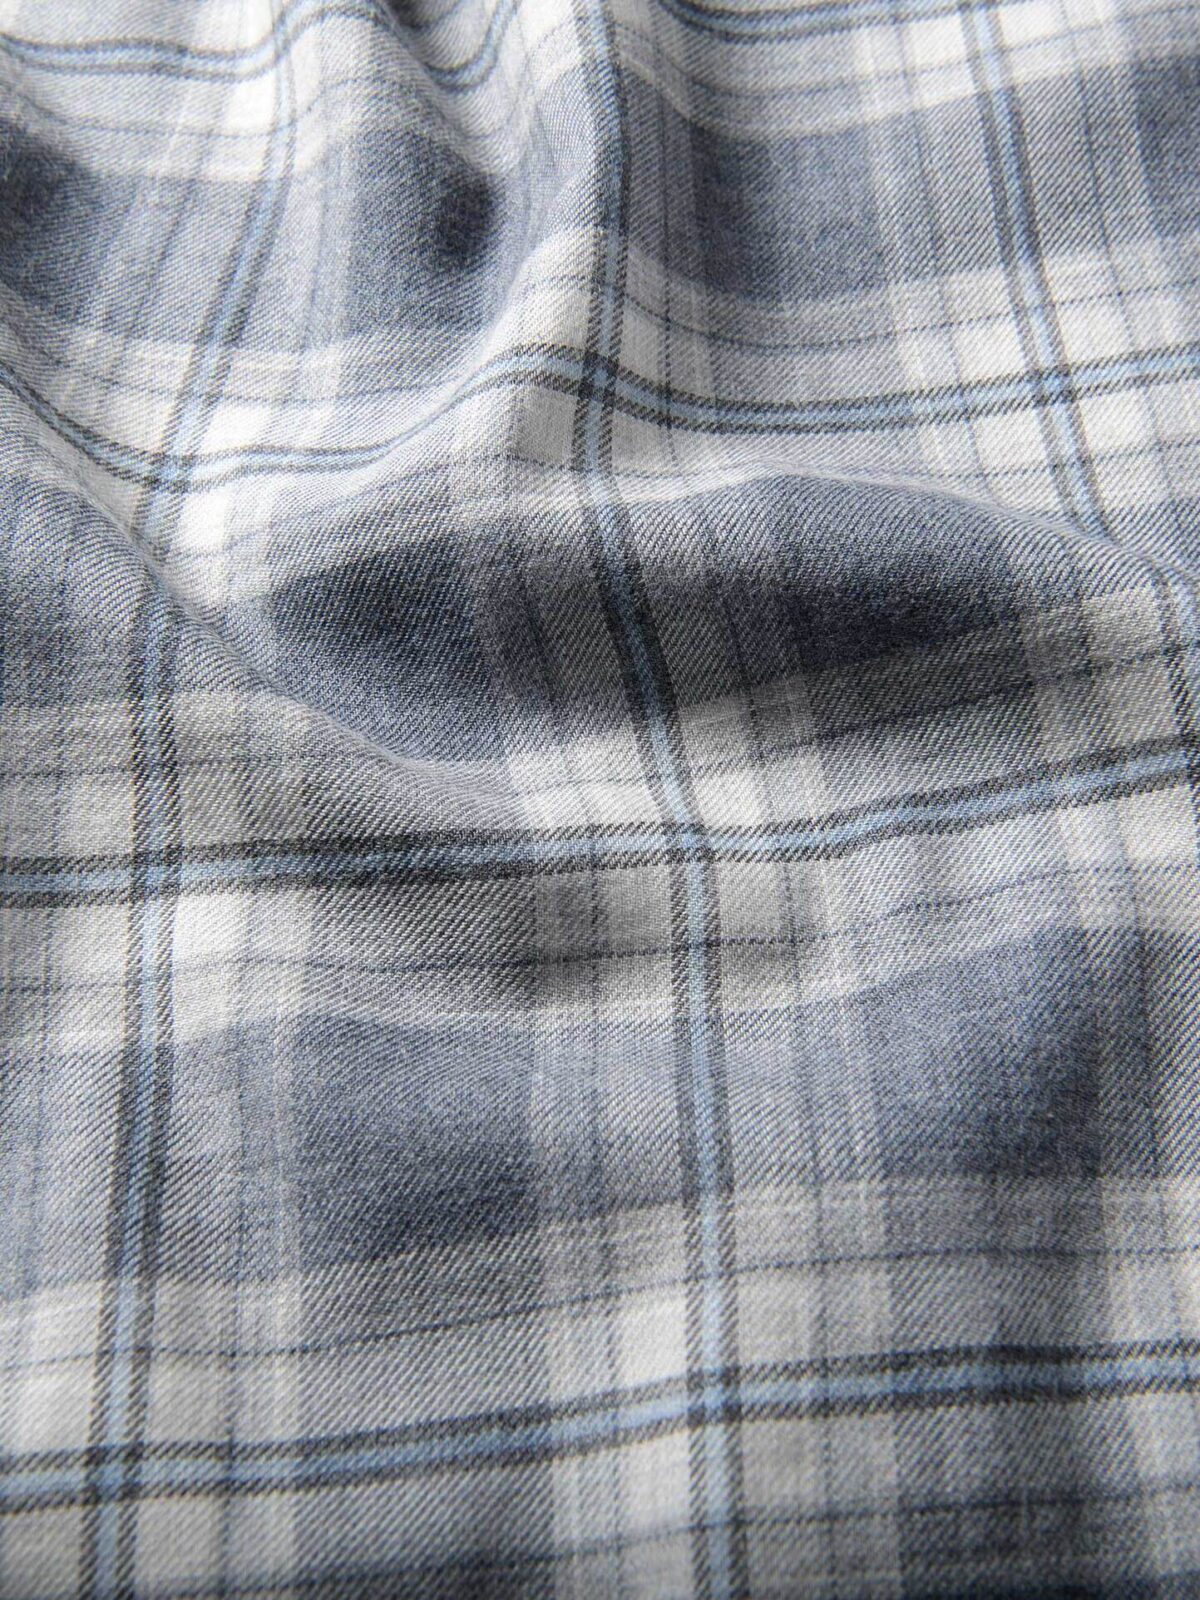 Satoyama Slate and Light Grey Plaid Flannel Shirts by Proper Cloth